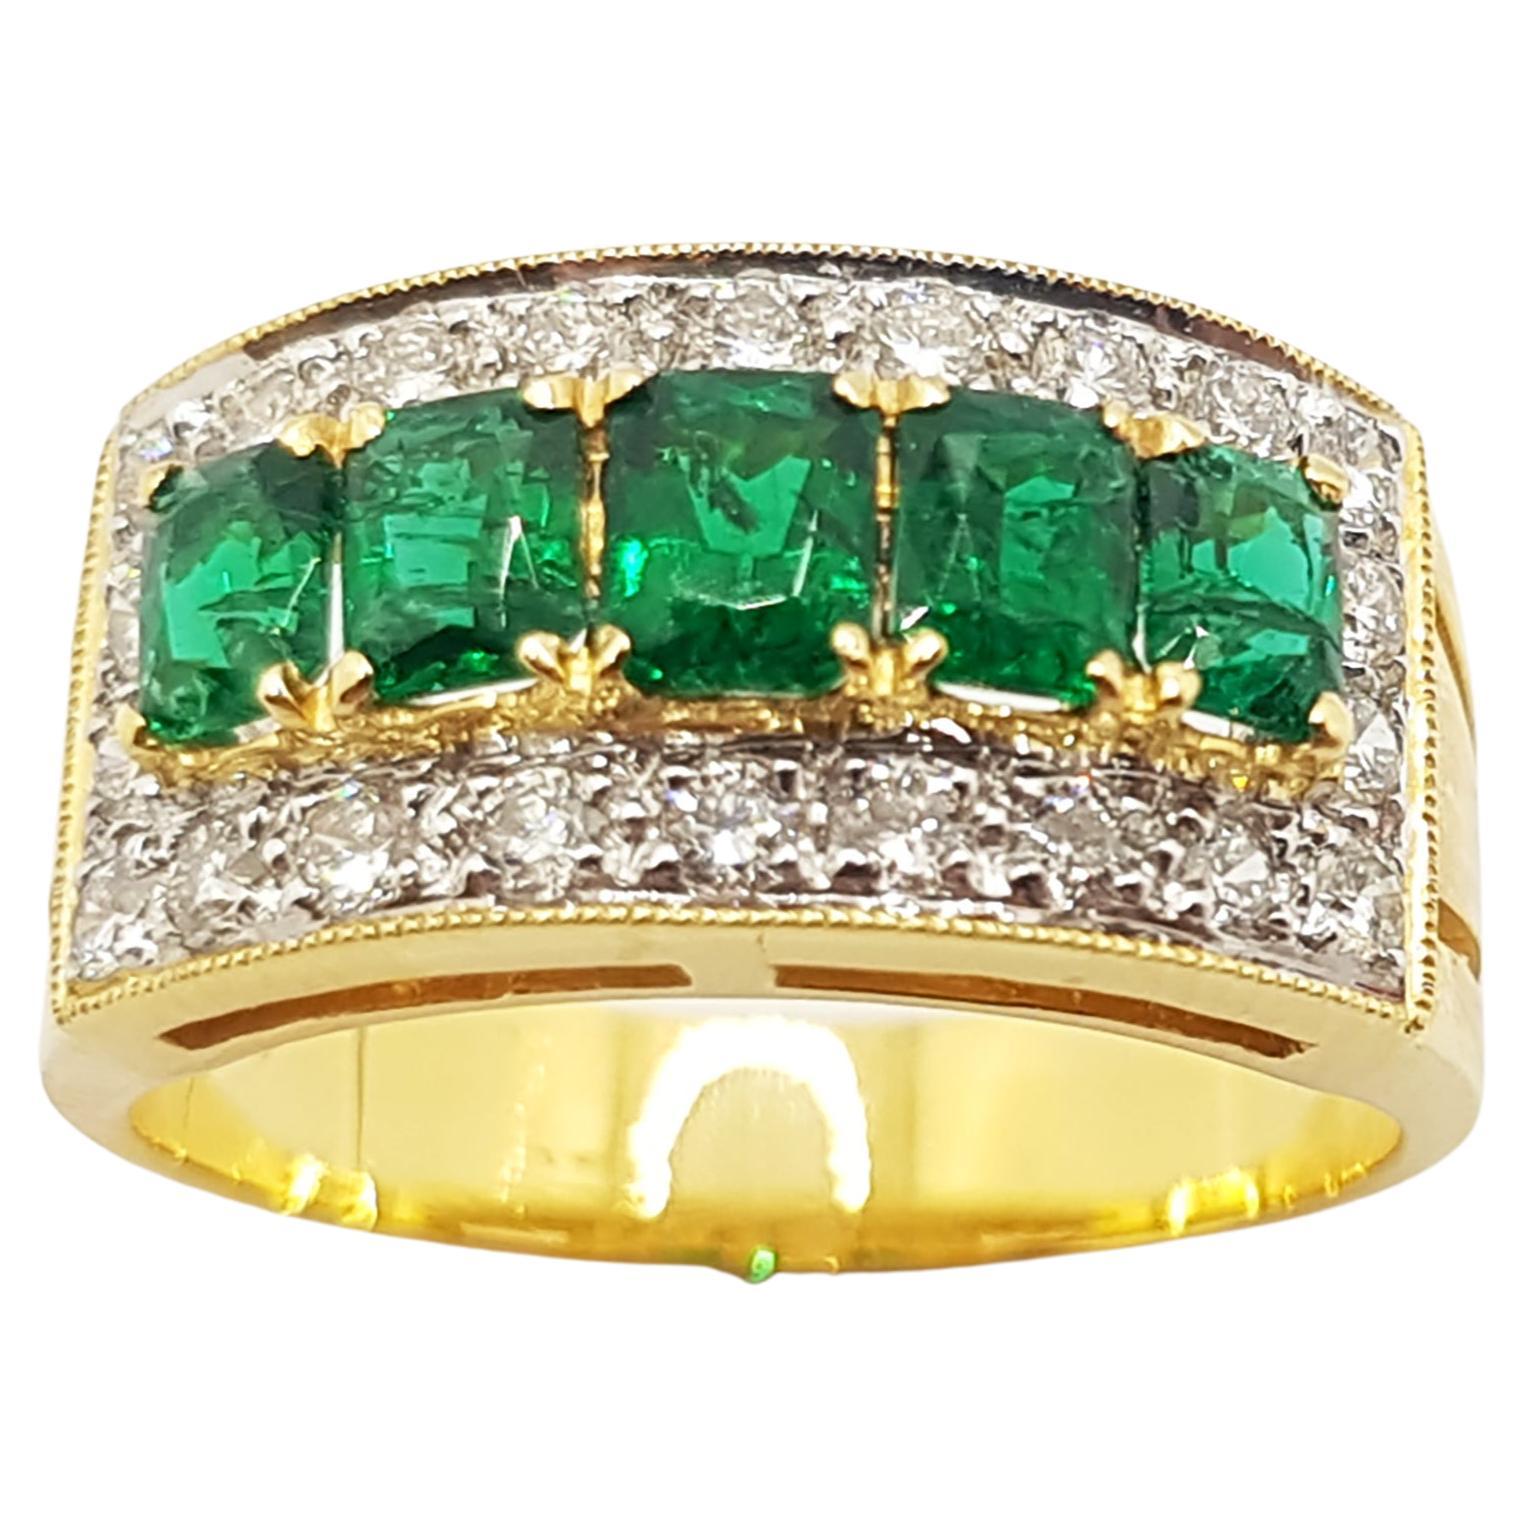 Emerald with Diamond Ring Set in 18 Karat Gold Settings